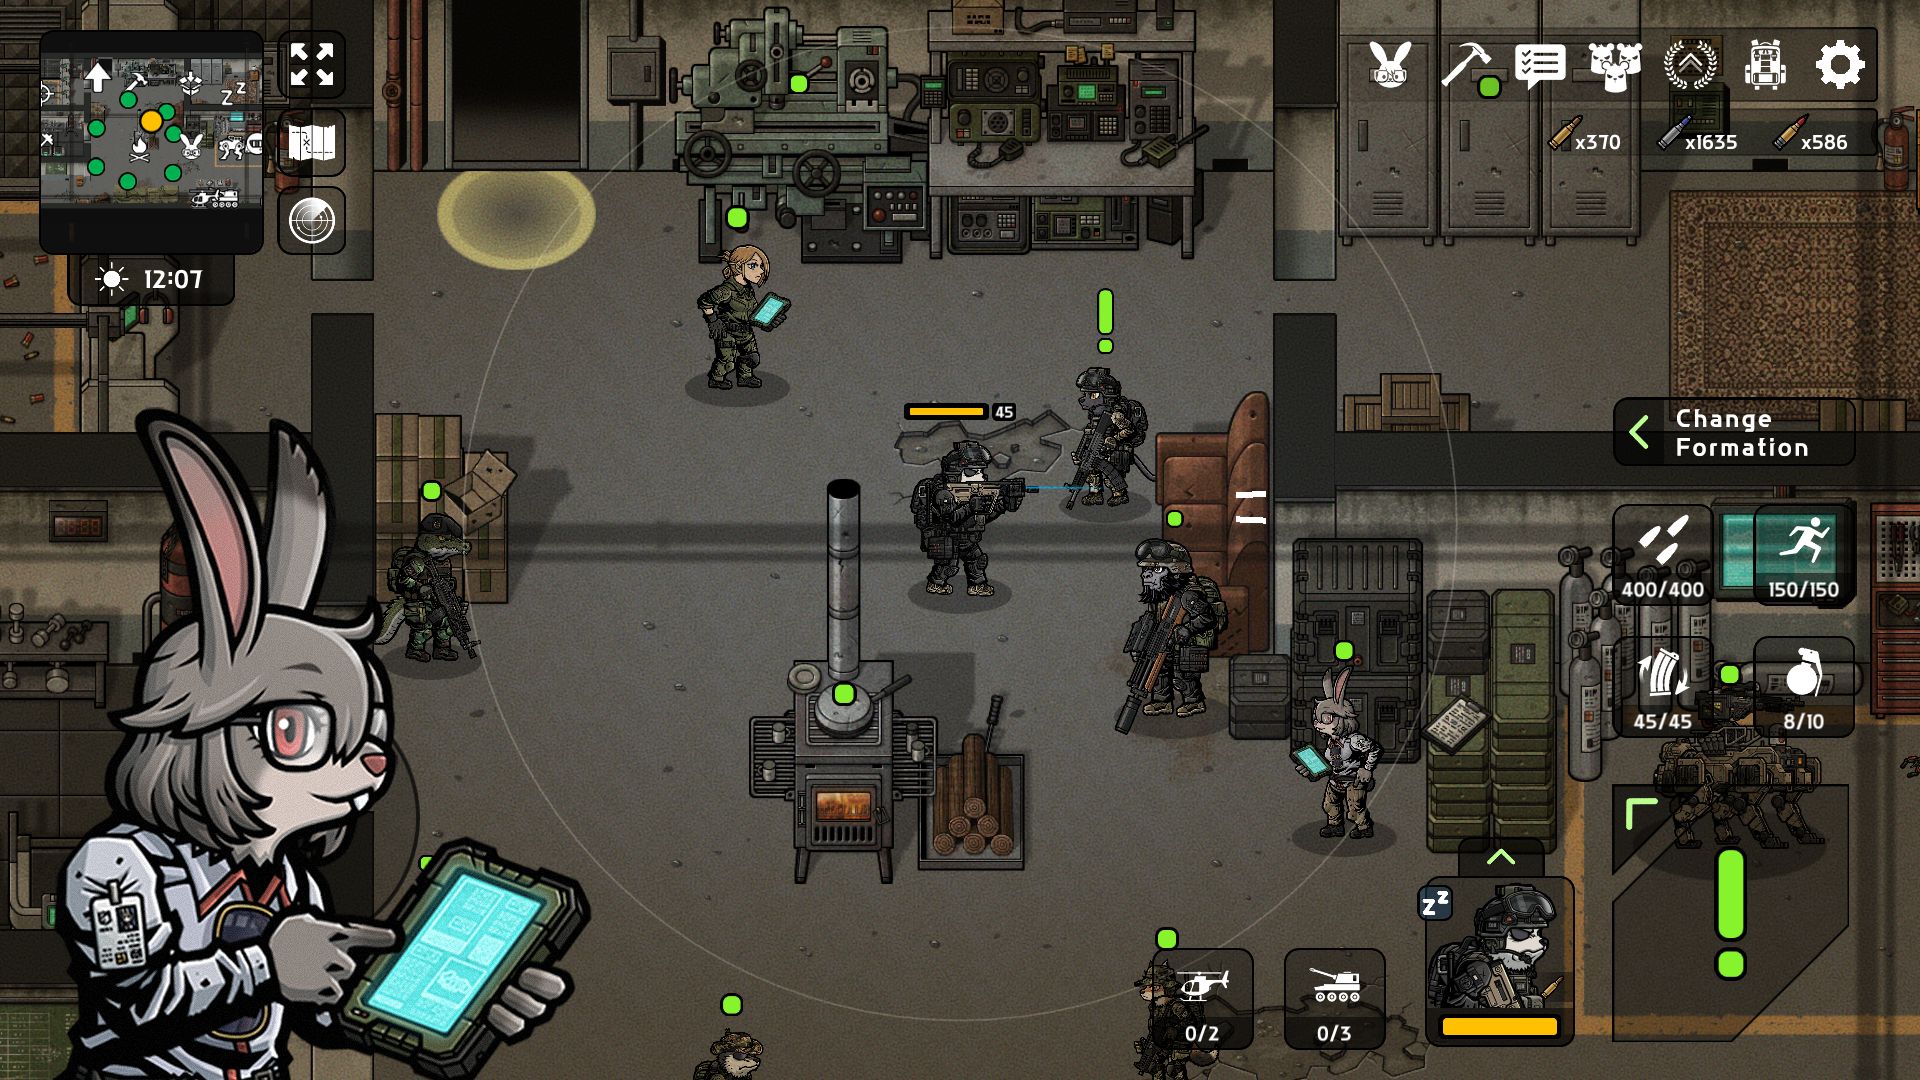 Bad 2 Bad: Apocalypse - Android game screenshots.